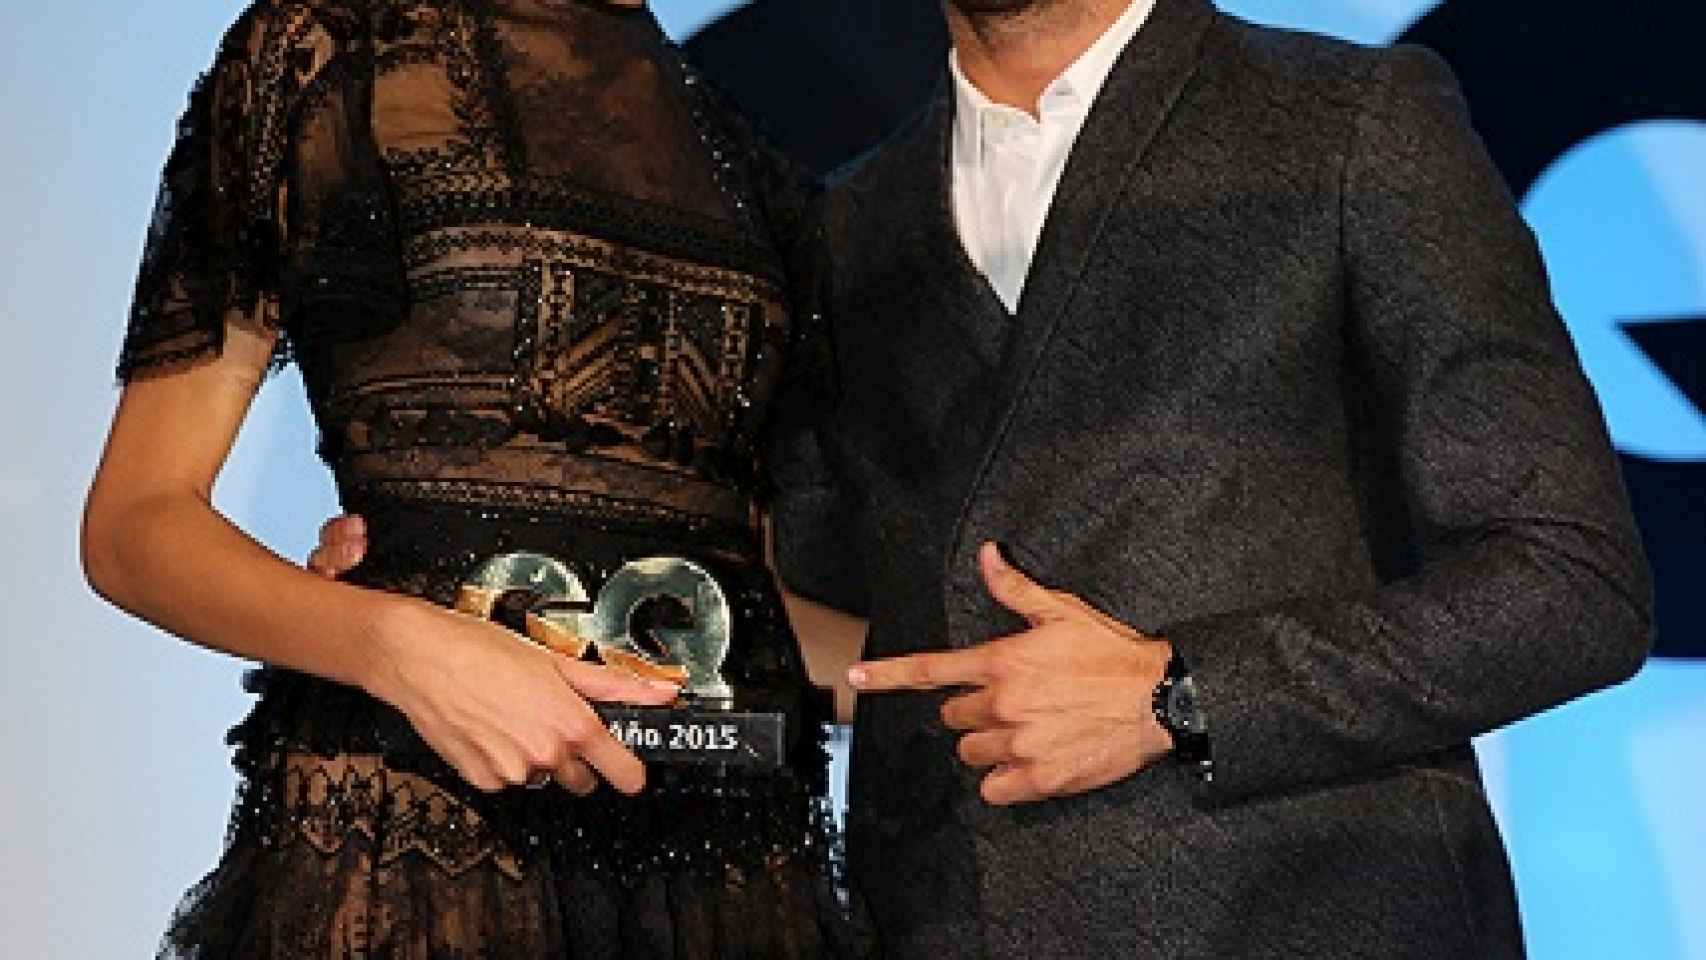 Maxi Iglesias le entregó el premio a la modelo Dalianah Arekion